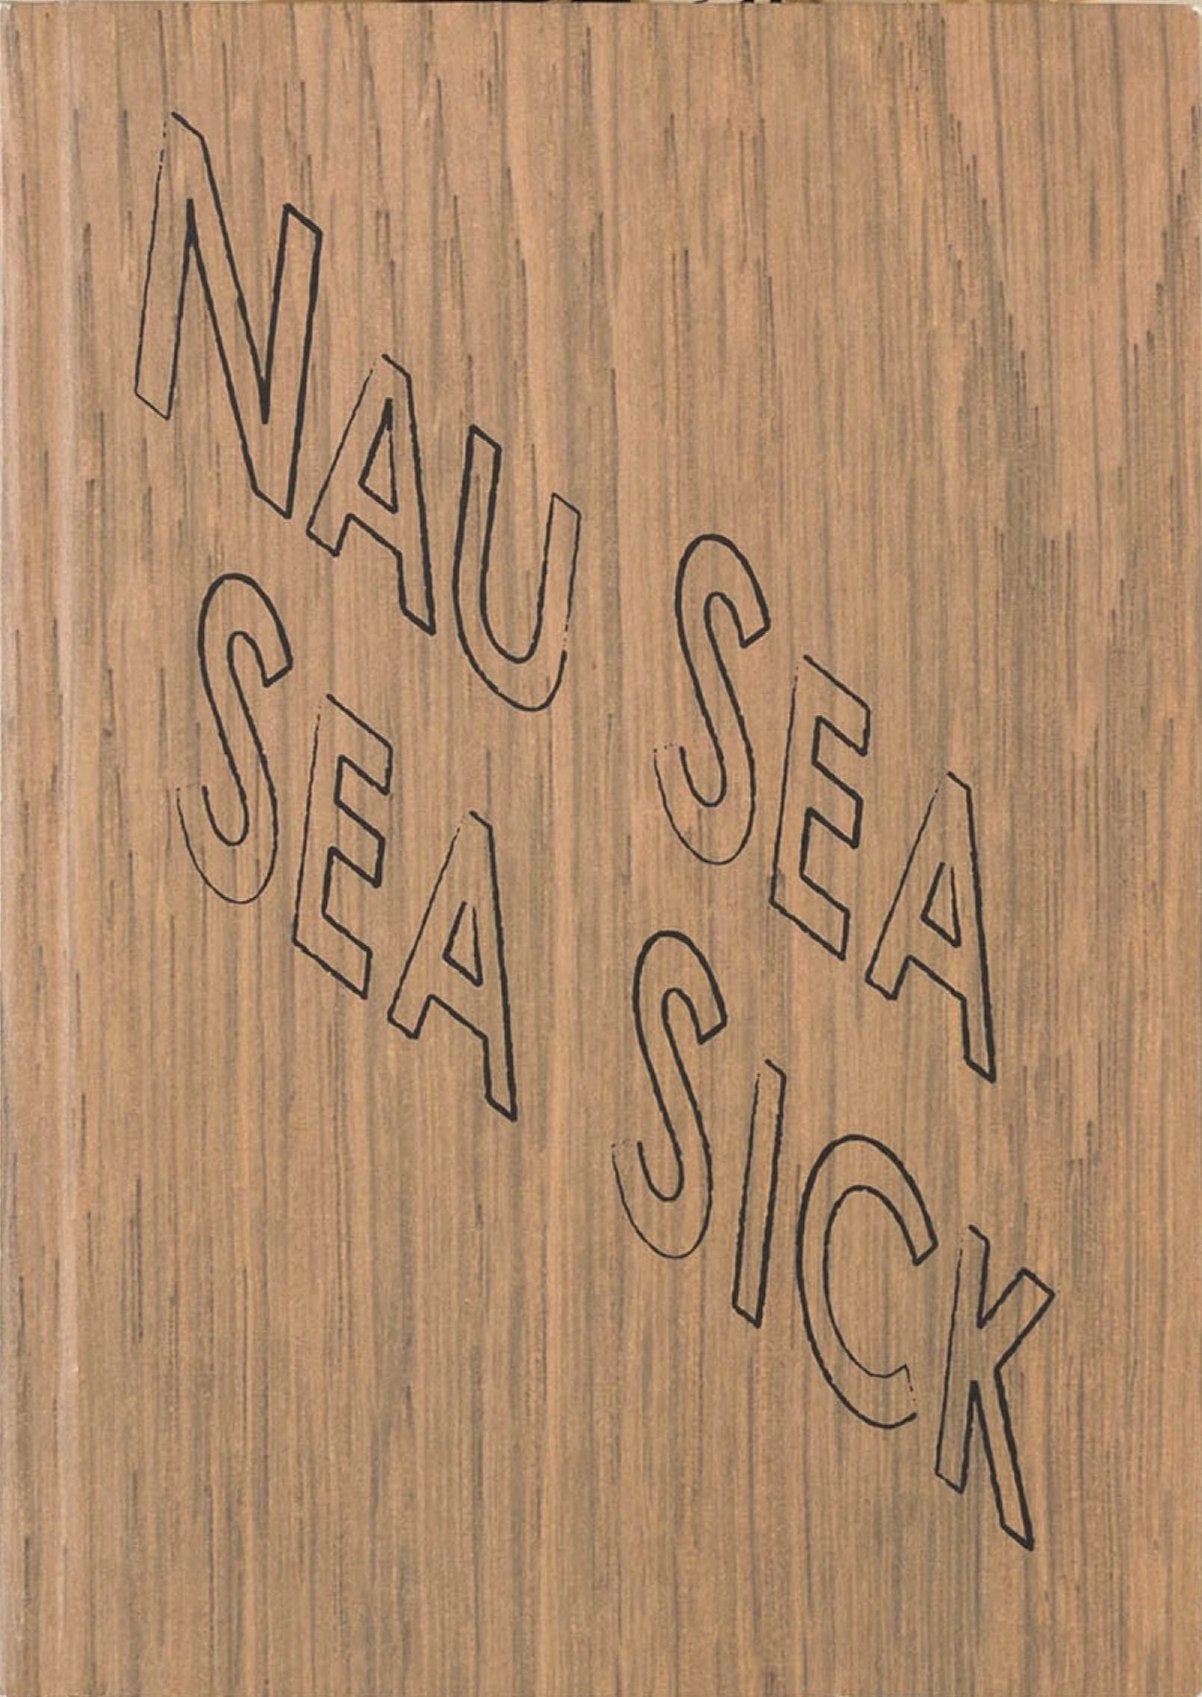 Kay Rosen: Nau Sea Sea Sick - Artist's Book at Kavi Gupta Editions